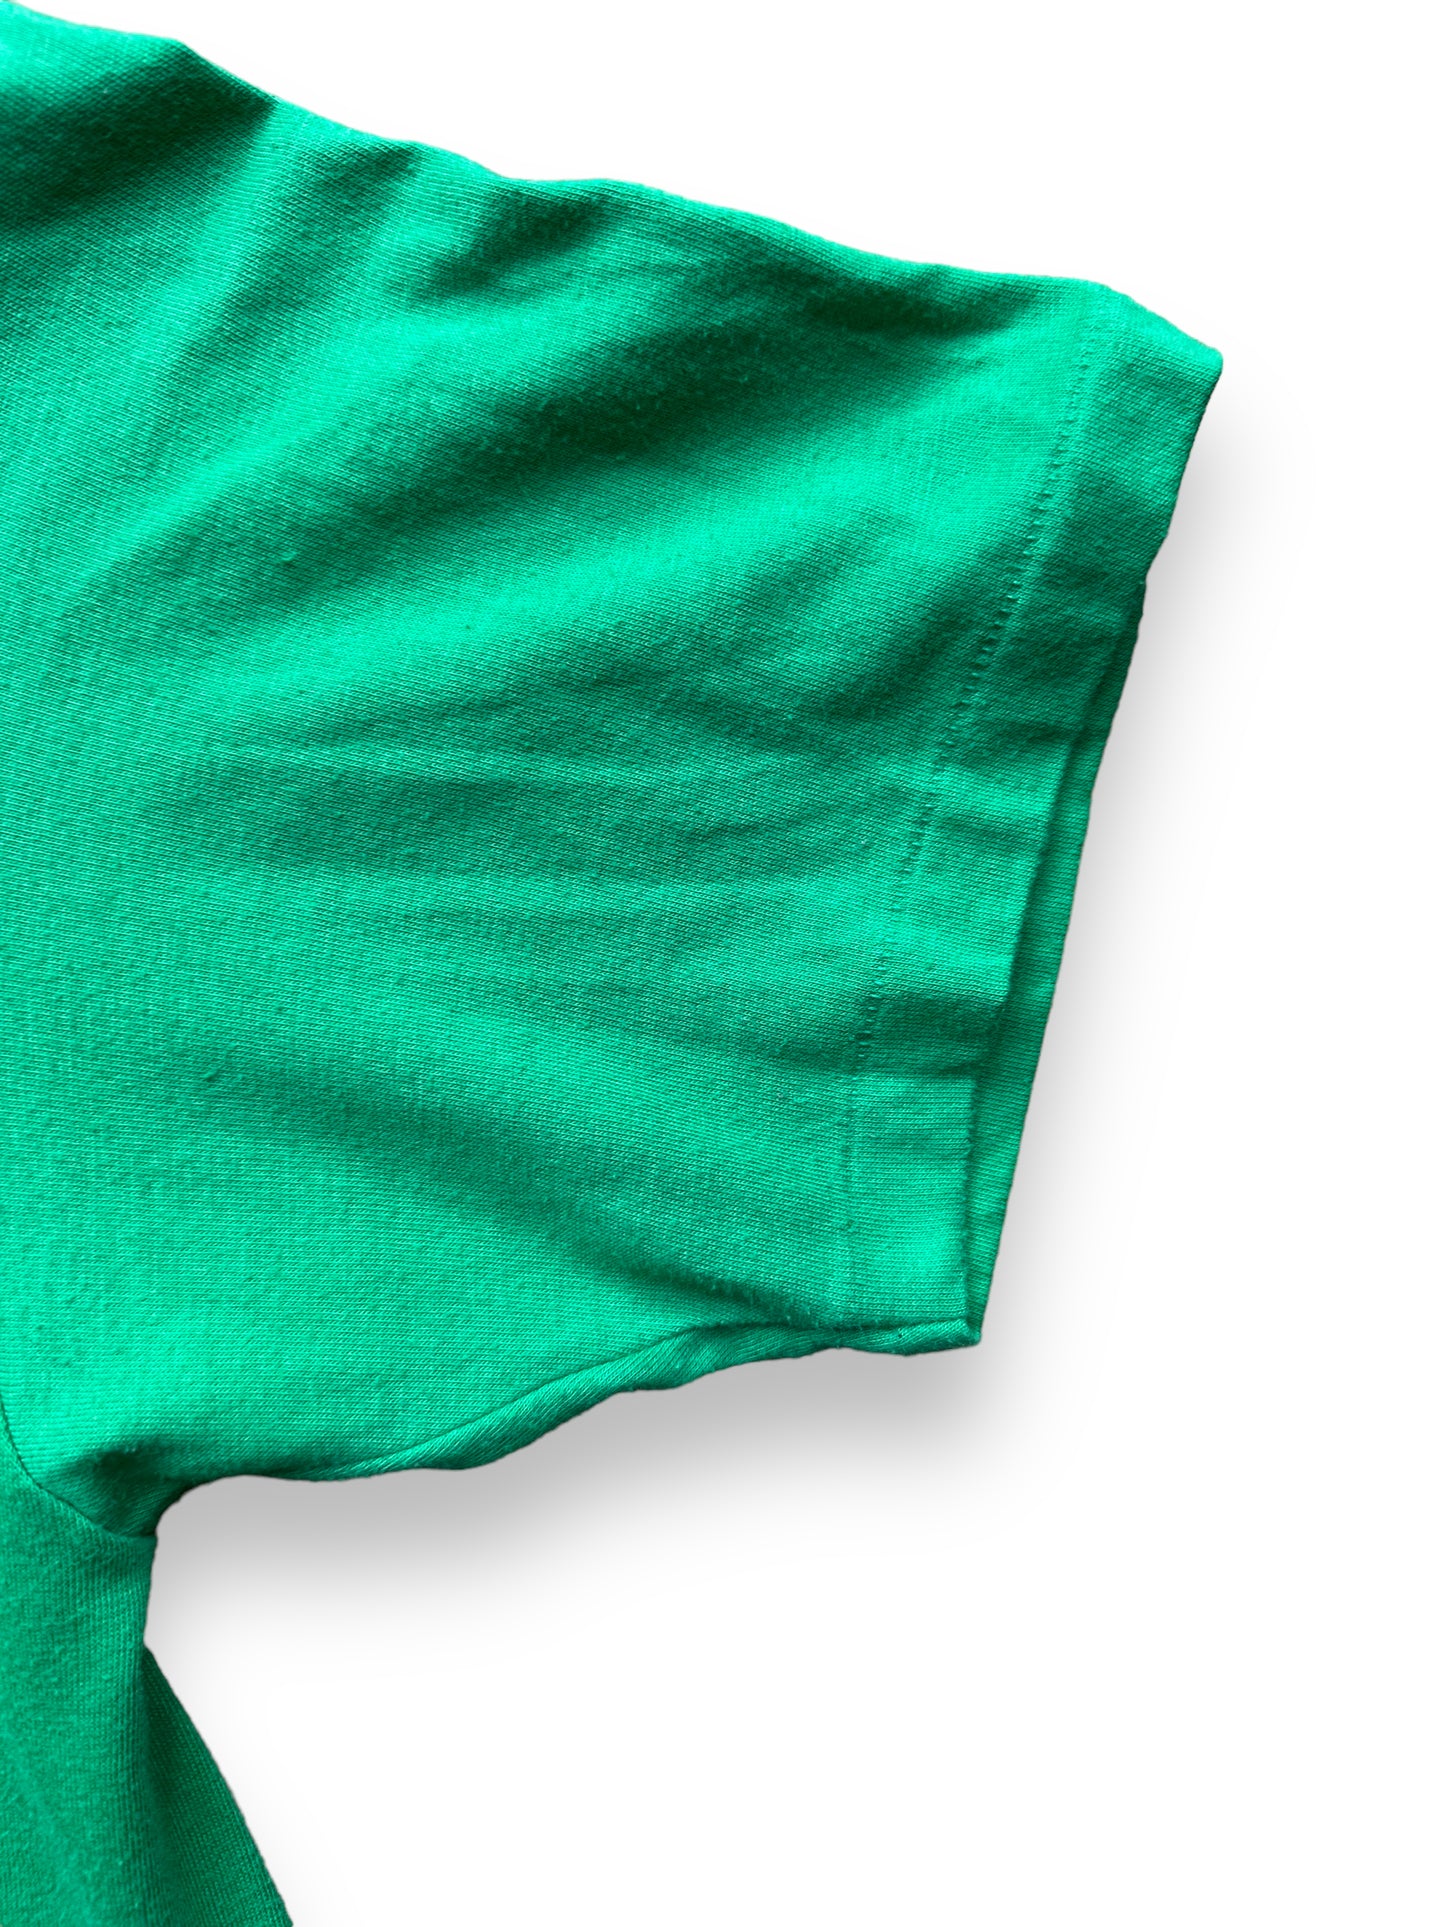 Single Stitch Sleeve on Vintage Green Hawaii Graphic Tee SZ M | Vintage T-Shirts Seattle | Barn Owl Vintage Tees Seattle